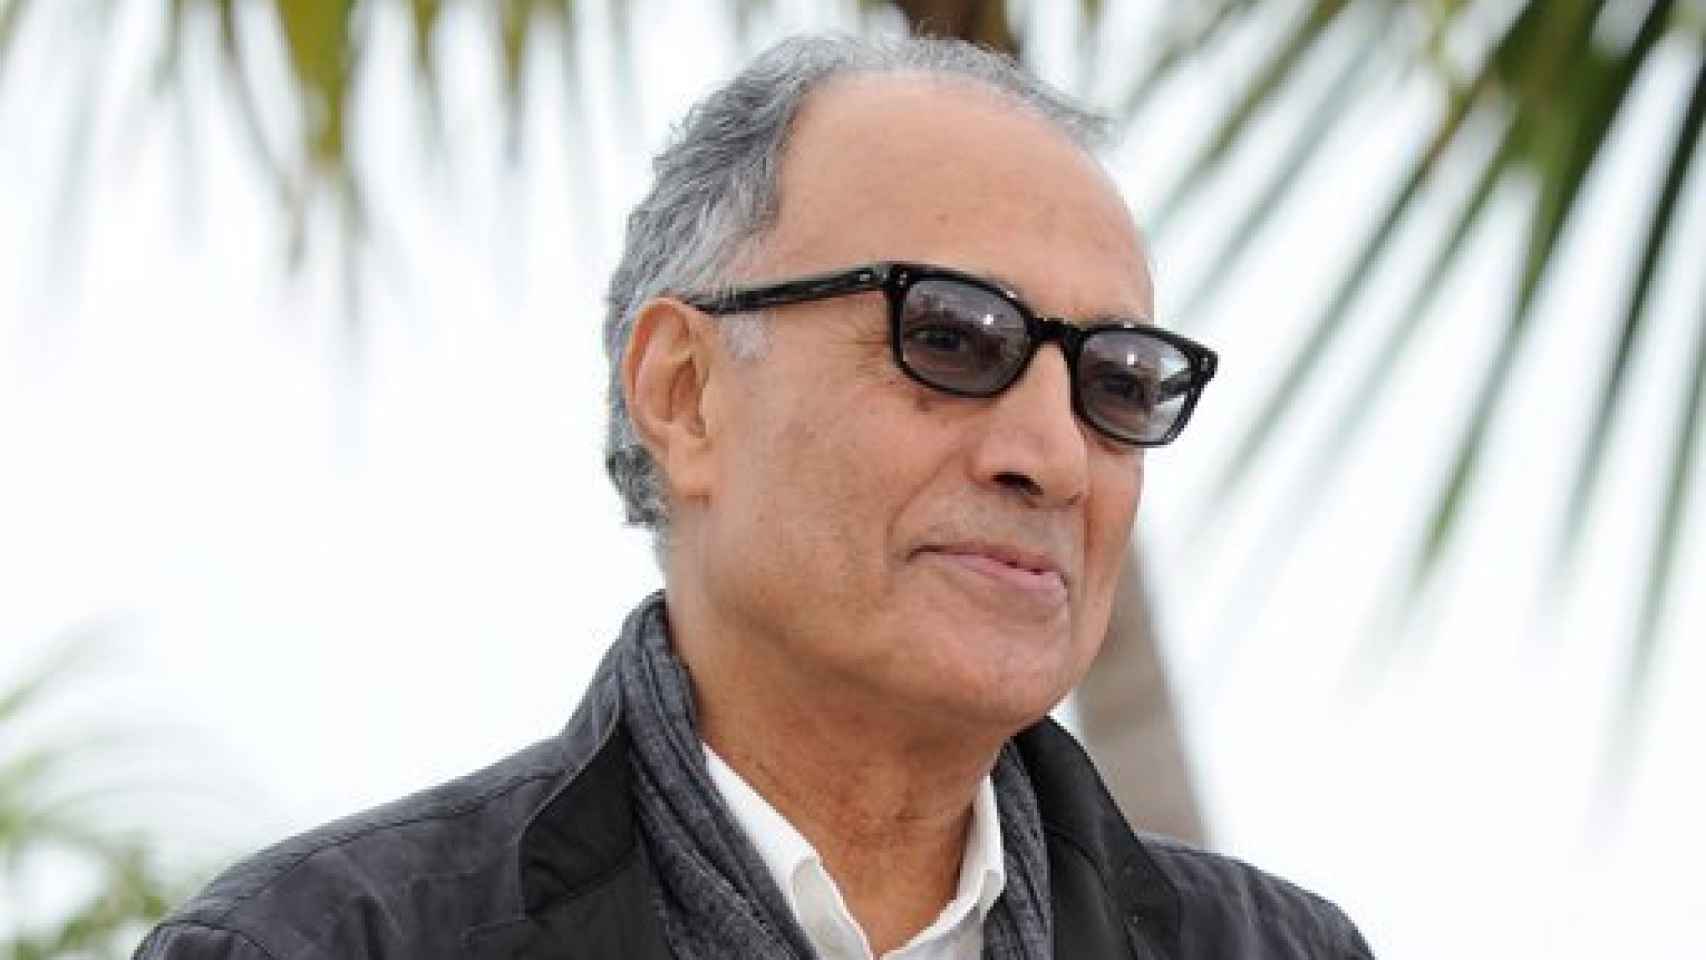 Image: Muere el cineasta iraní Abbas Kiarostami